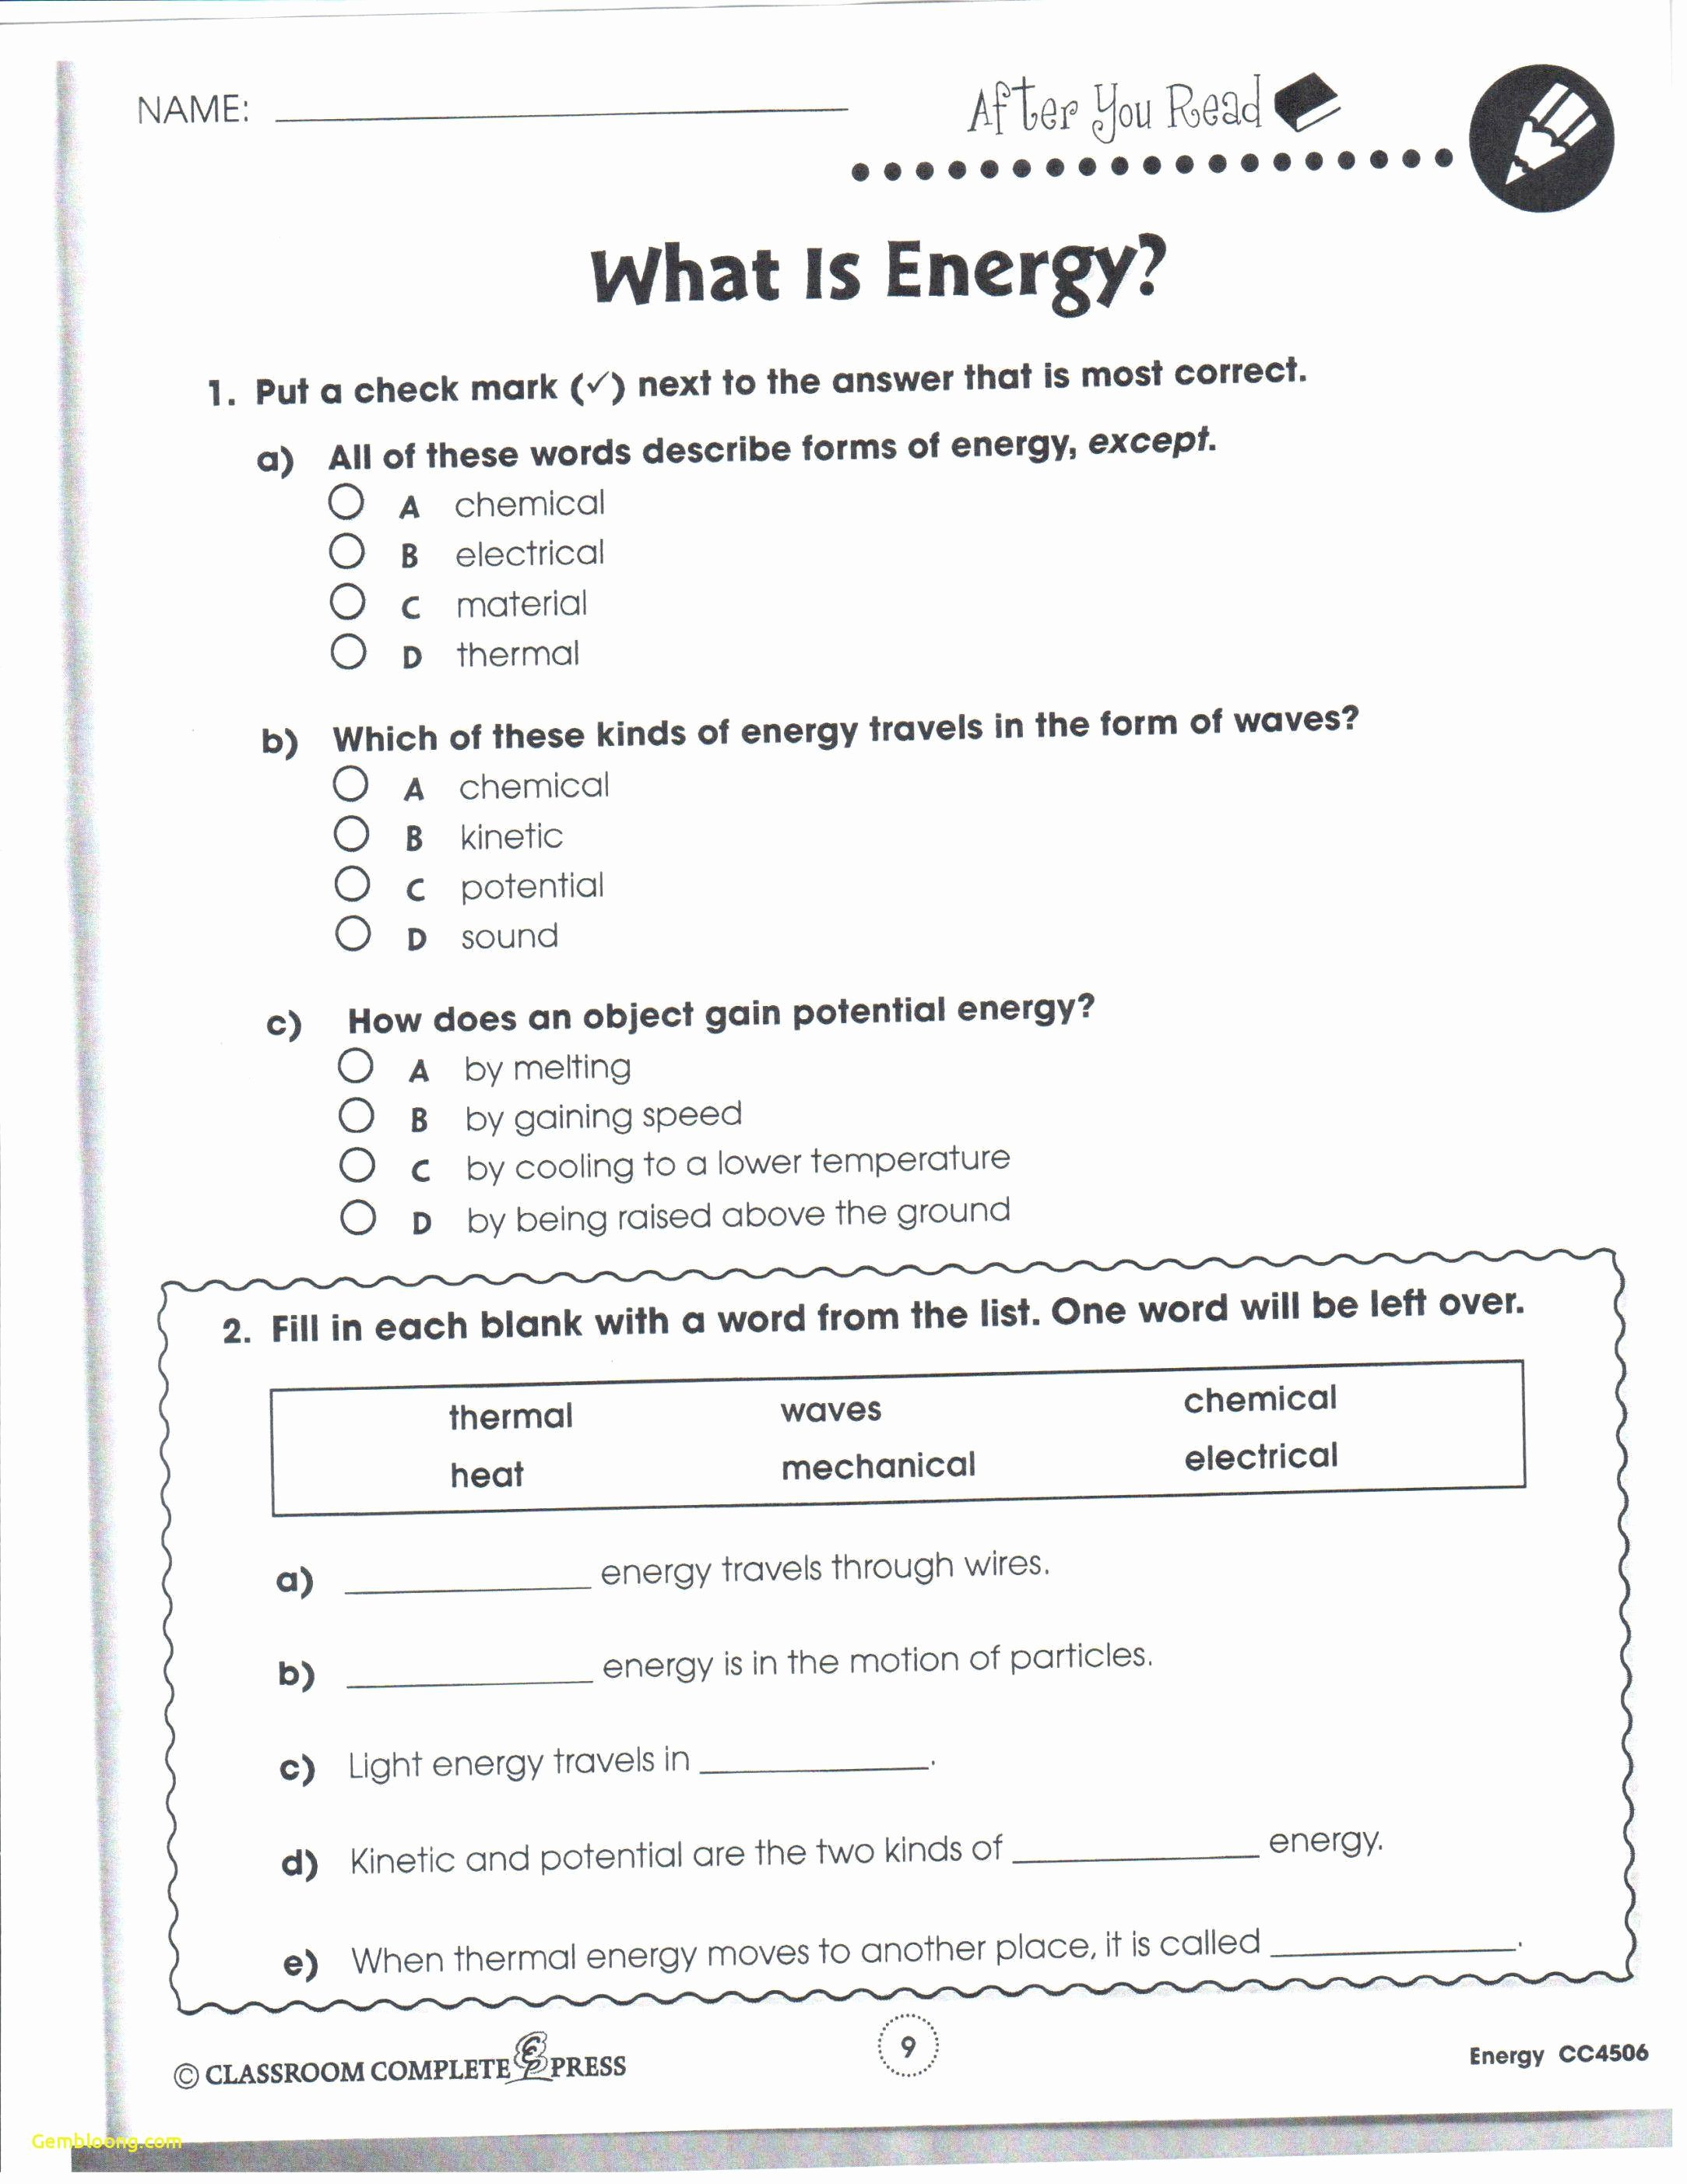 Bill Nye Energy Worksheet Answers Awesome Bill Nye Waves Worksheet Cramerforcongress